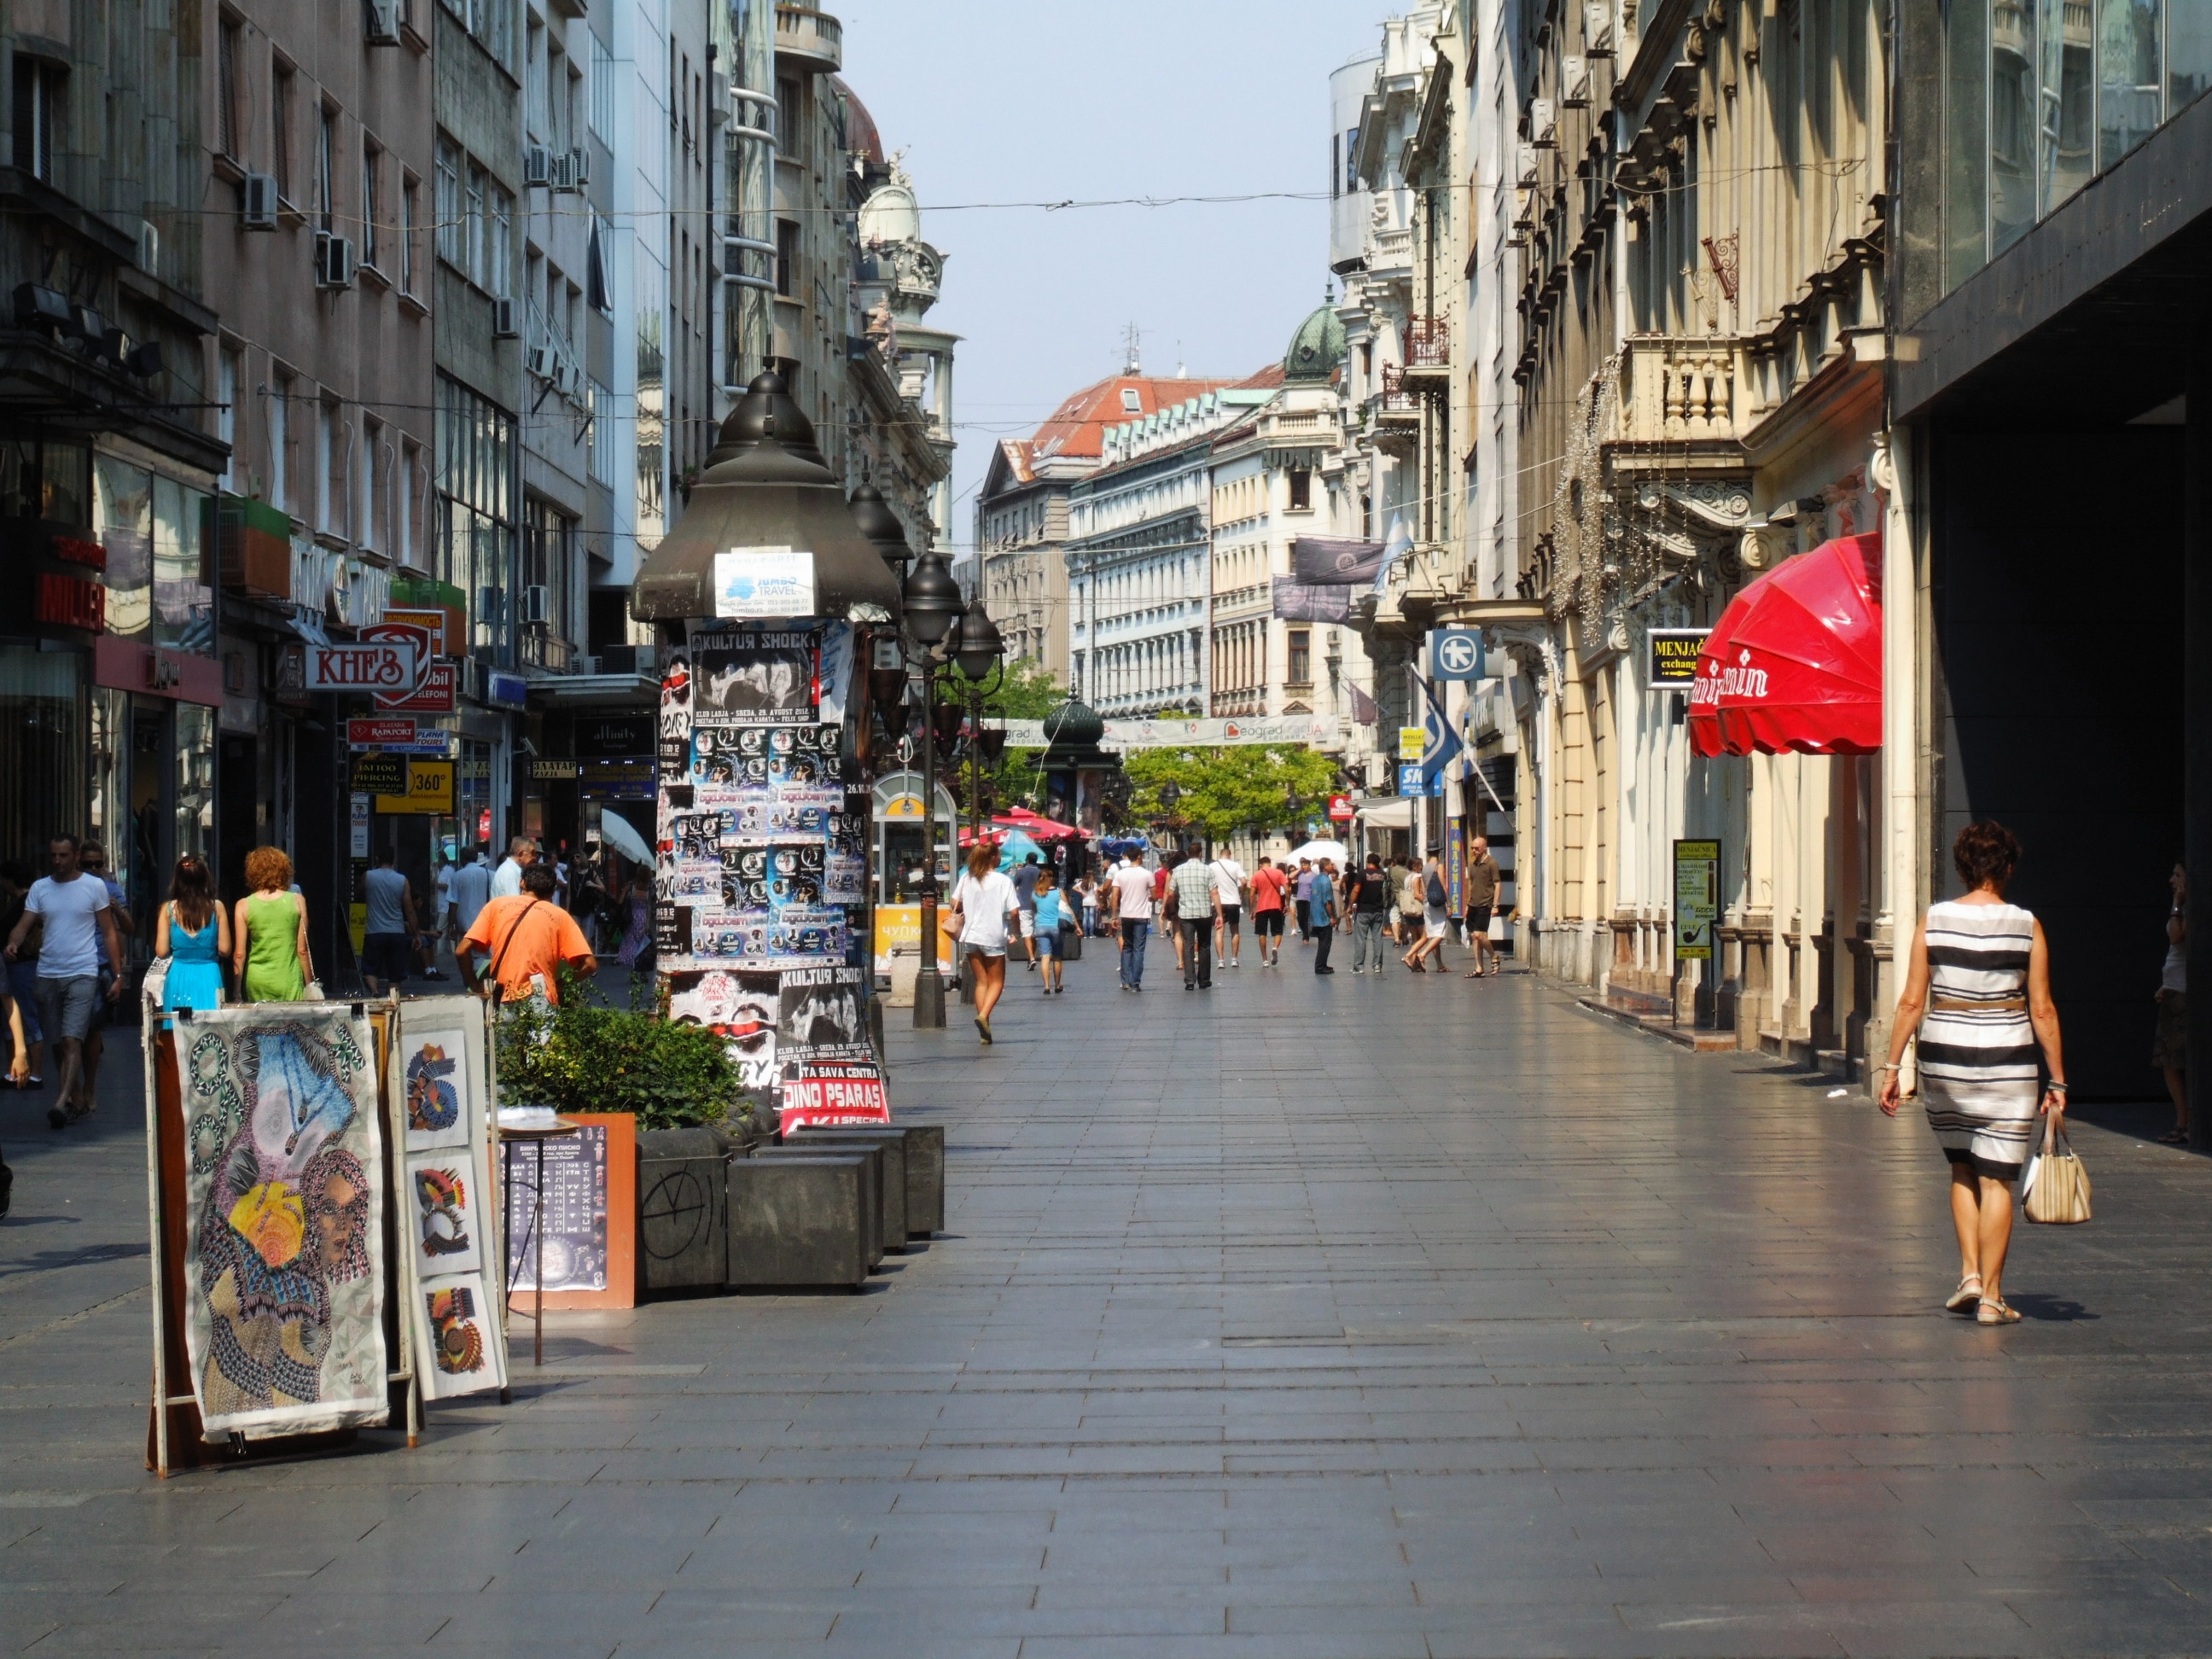 01 Knez_Mihailova_street,_Belgrade_(by_Pudelek)_2